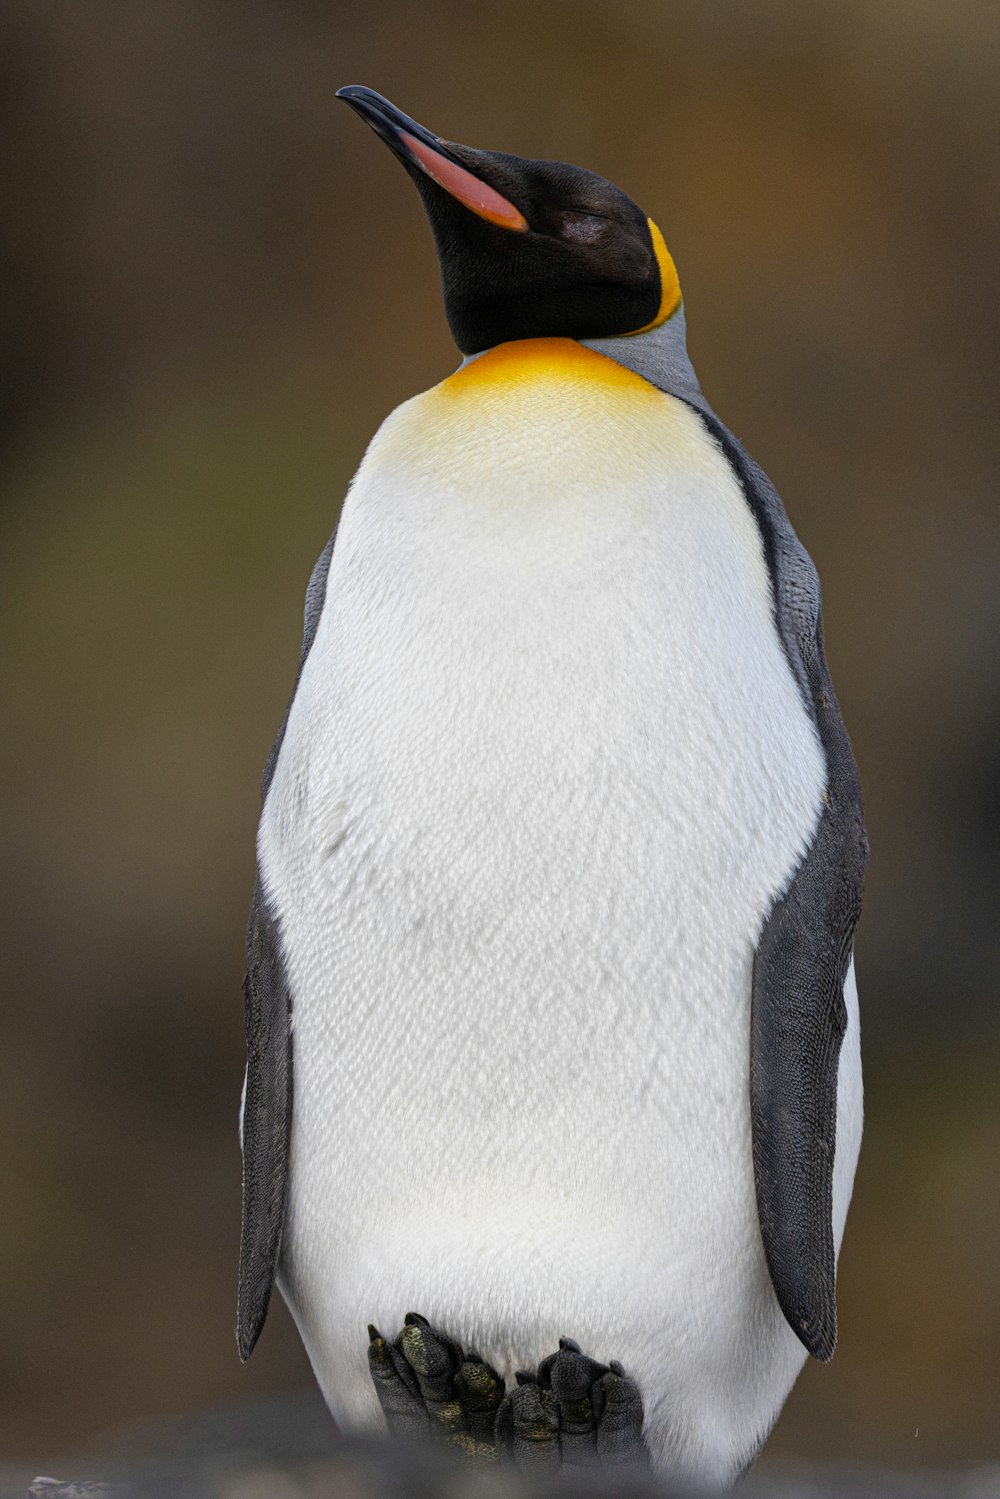 gros plan d’un pingouin sur un rocher